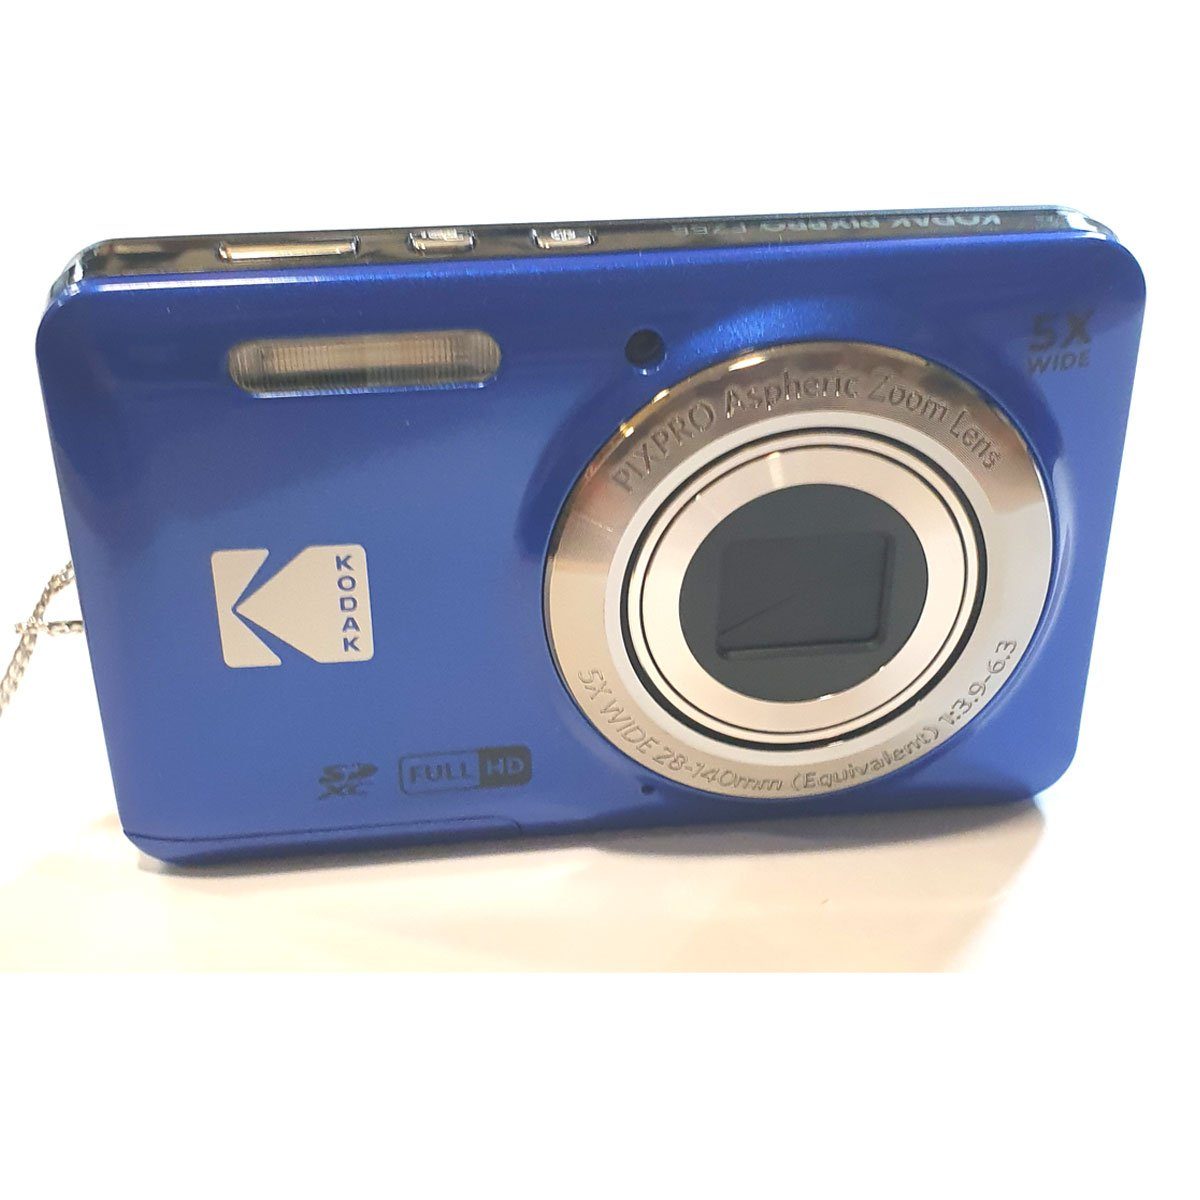 Angebot blau Kodak Kodak Set Digitalkamera Kompaktkamera FZ55